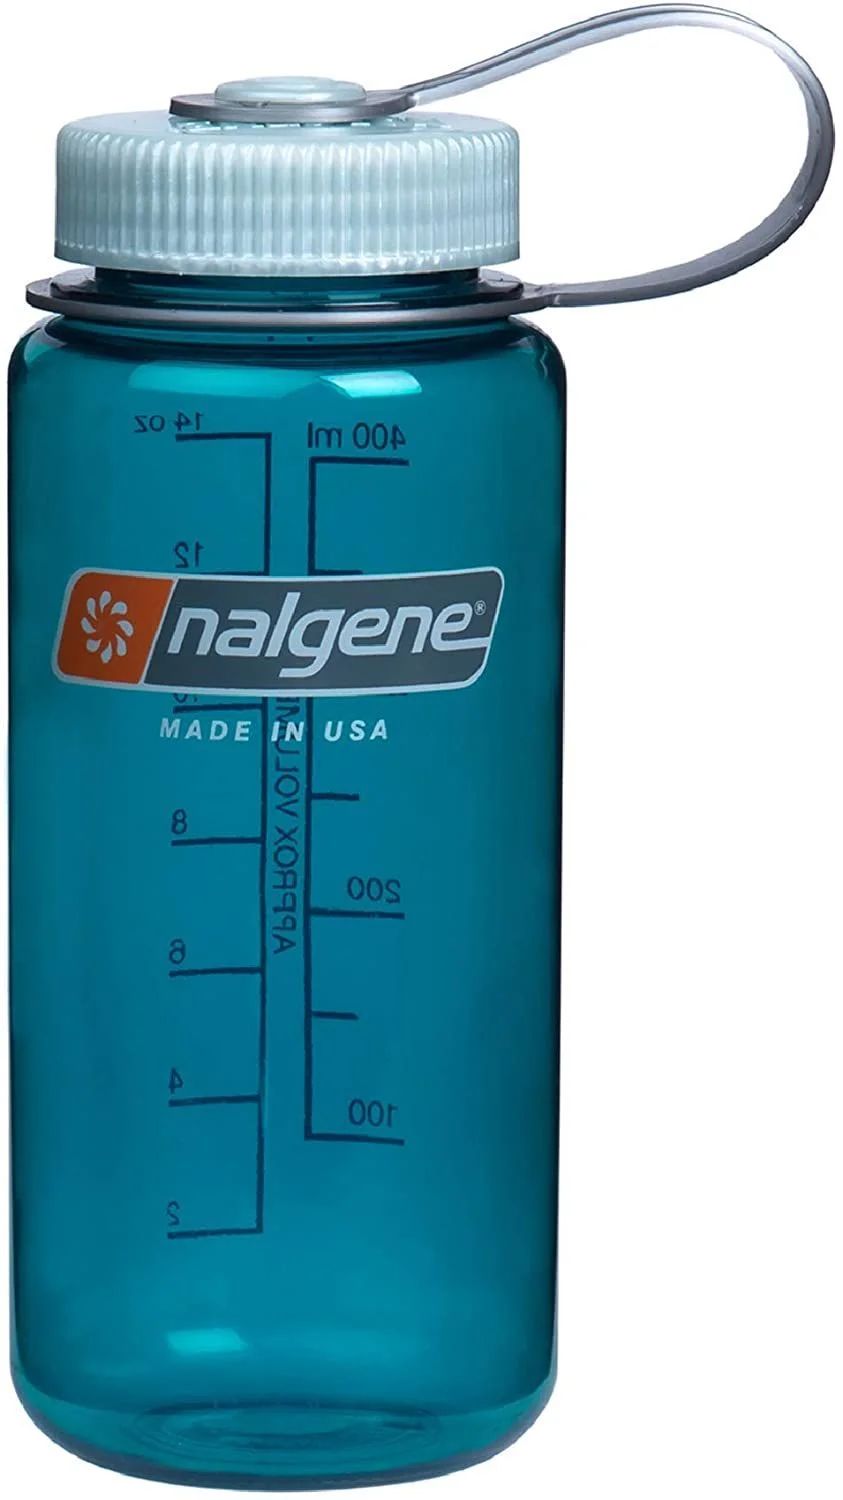 nalgene(ナルゲン) カラーボトル 広口0.5L トライタンボトル